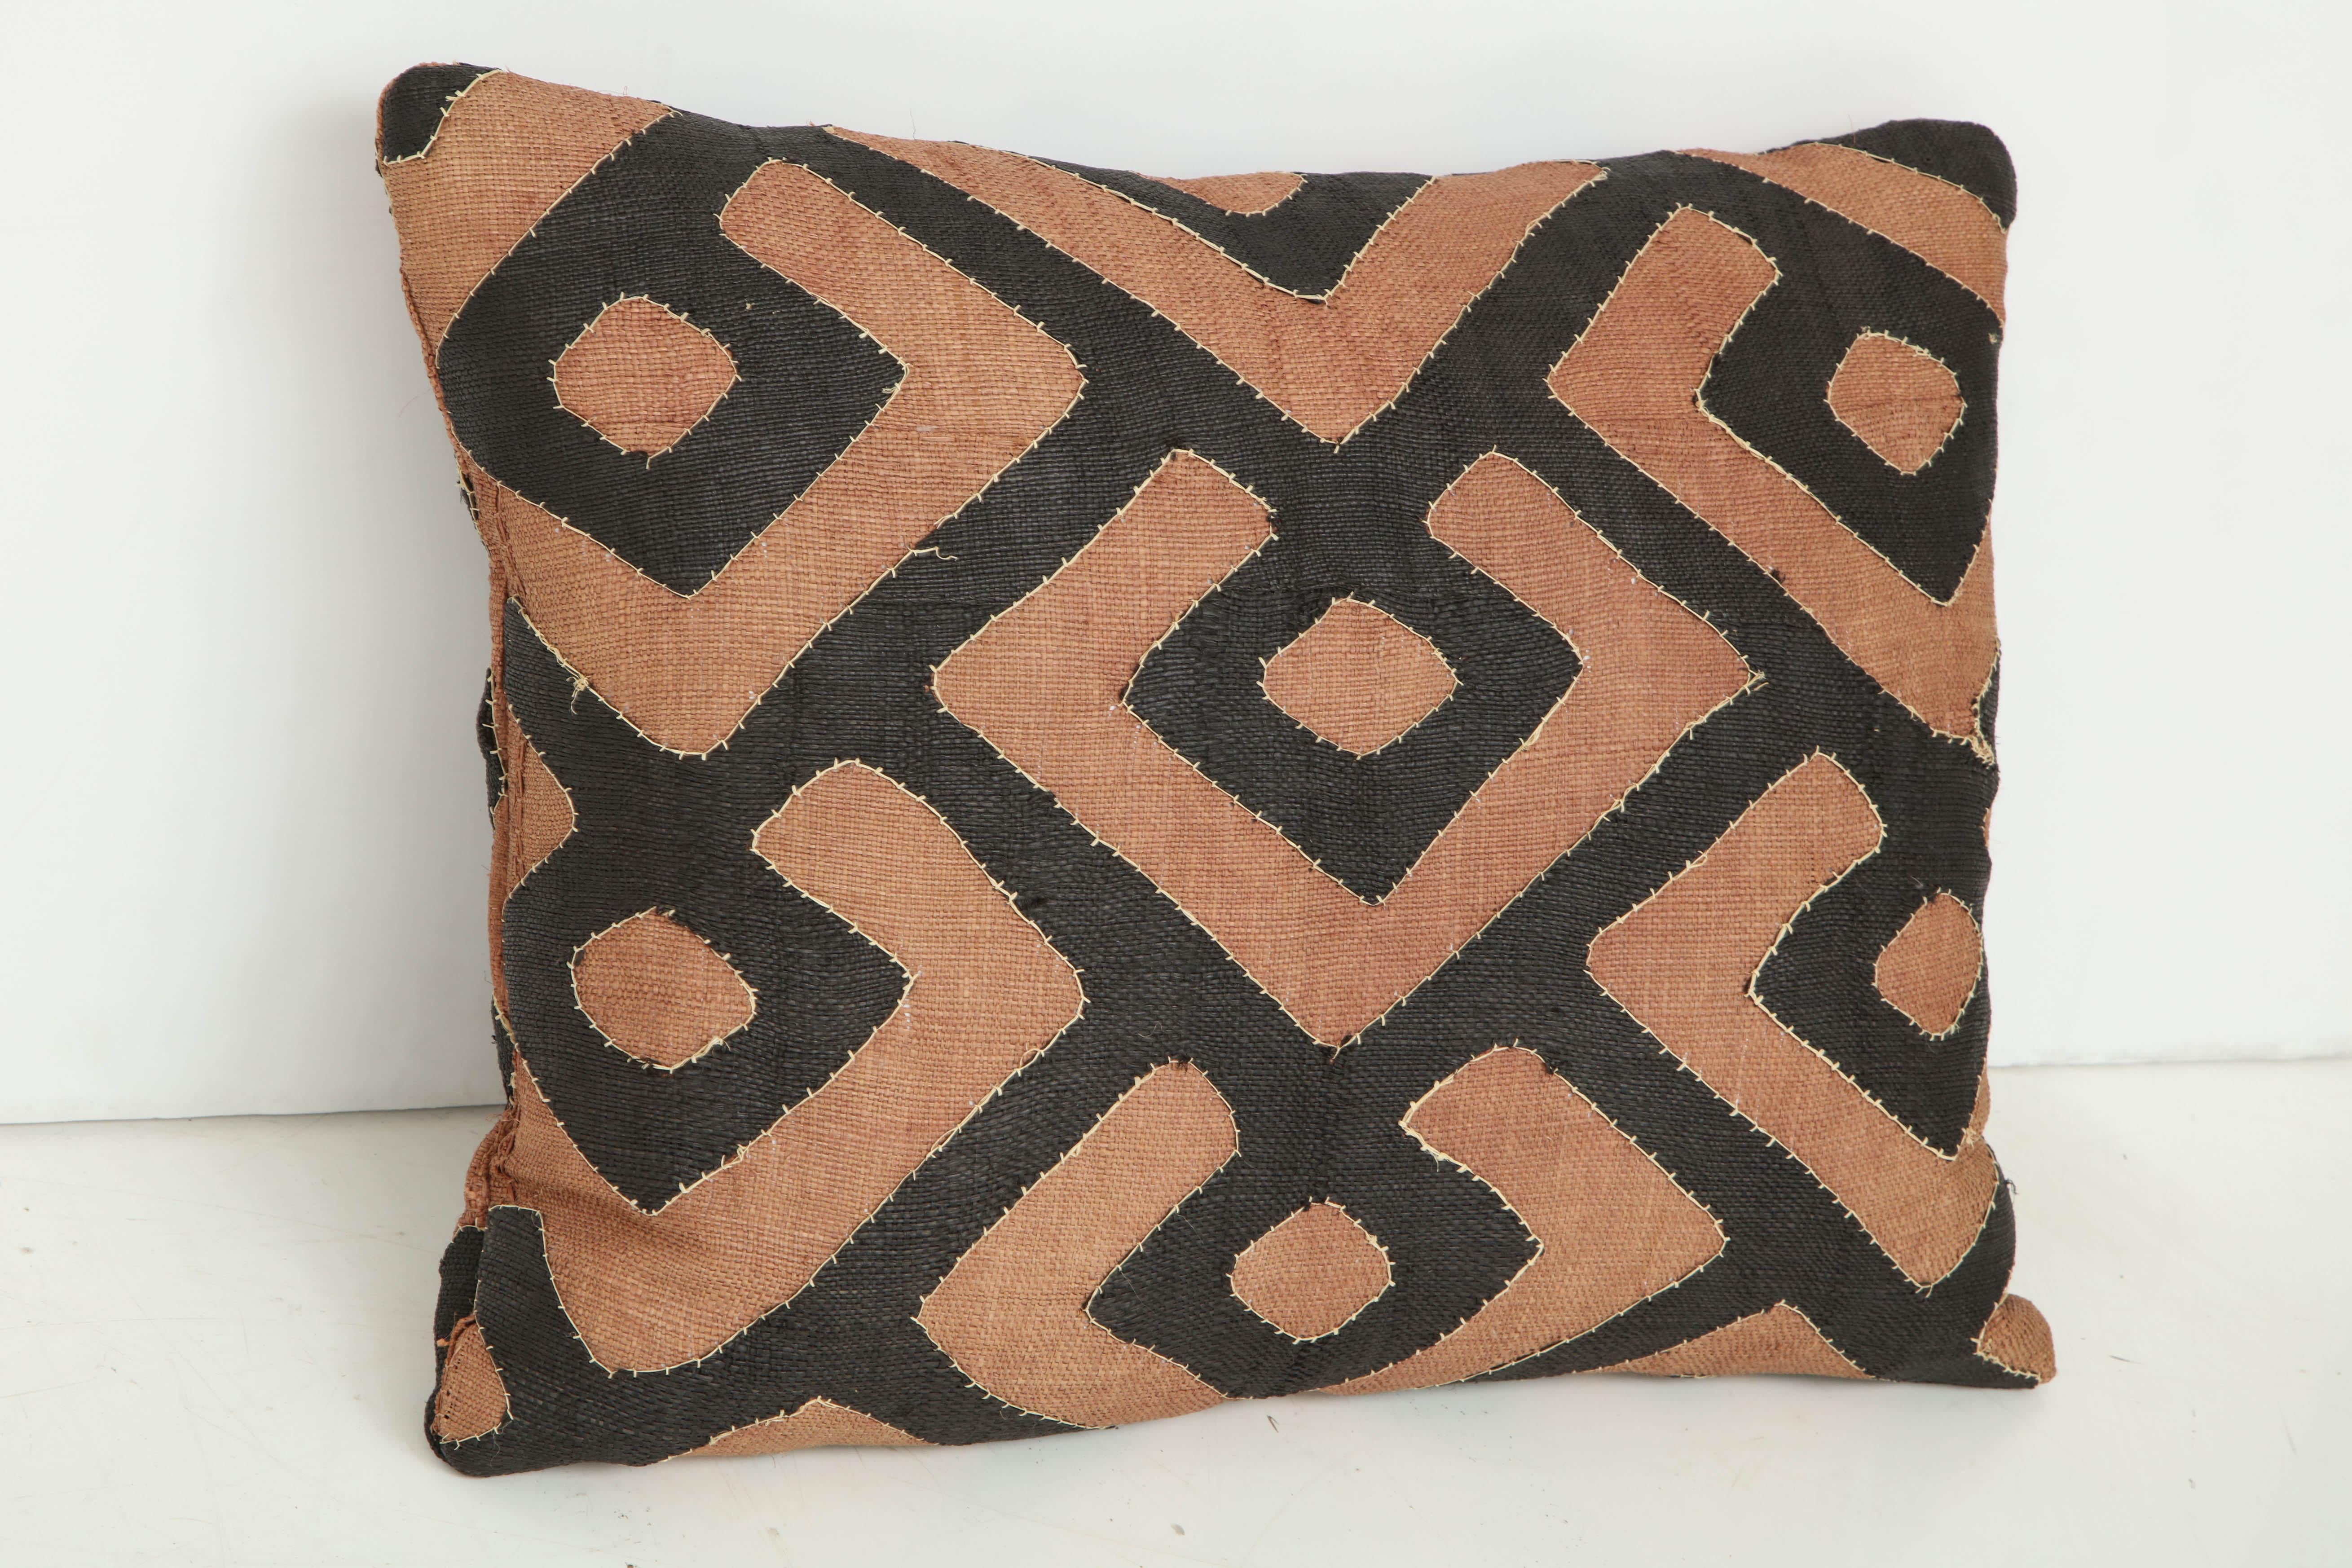 Early 20th century Kuba raffia cloth pillow, brown and black.